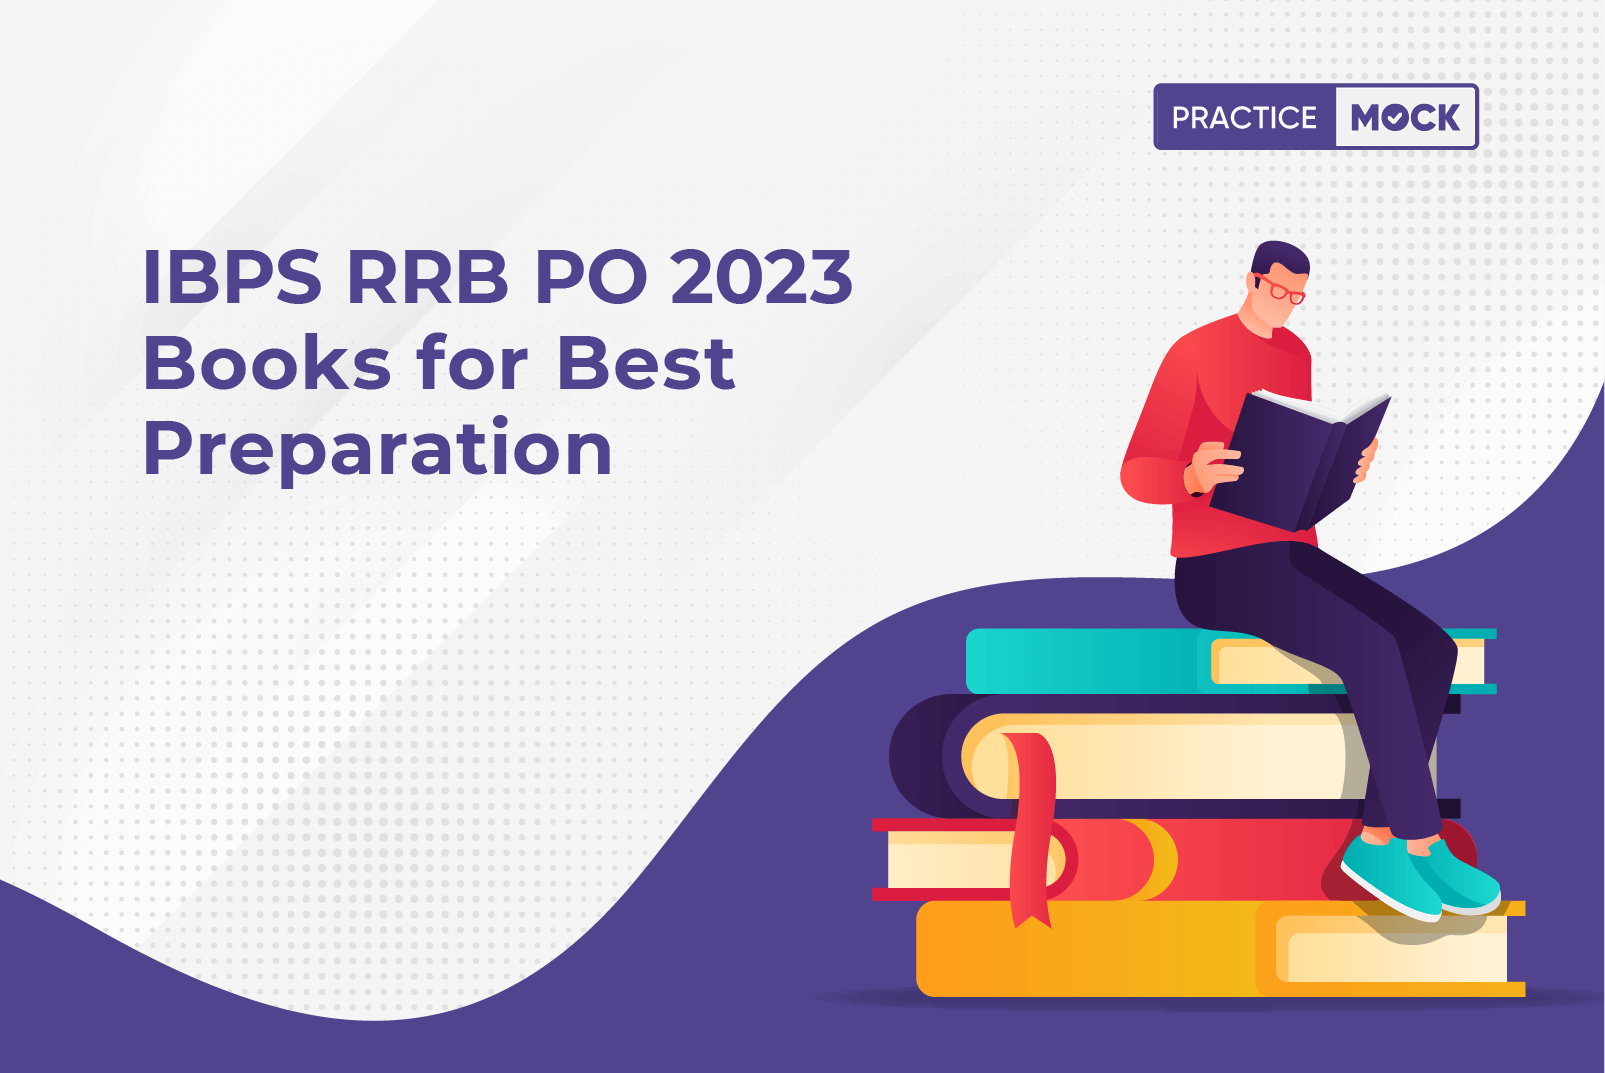 IBPS RRB PO Books For Best Preparation PracticeMock